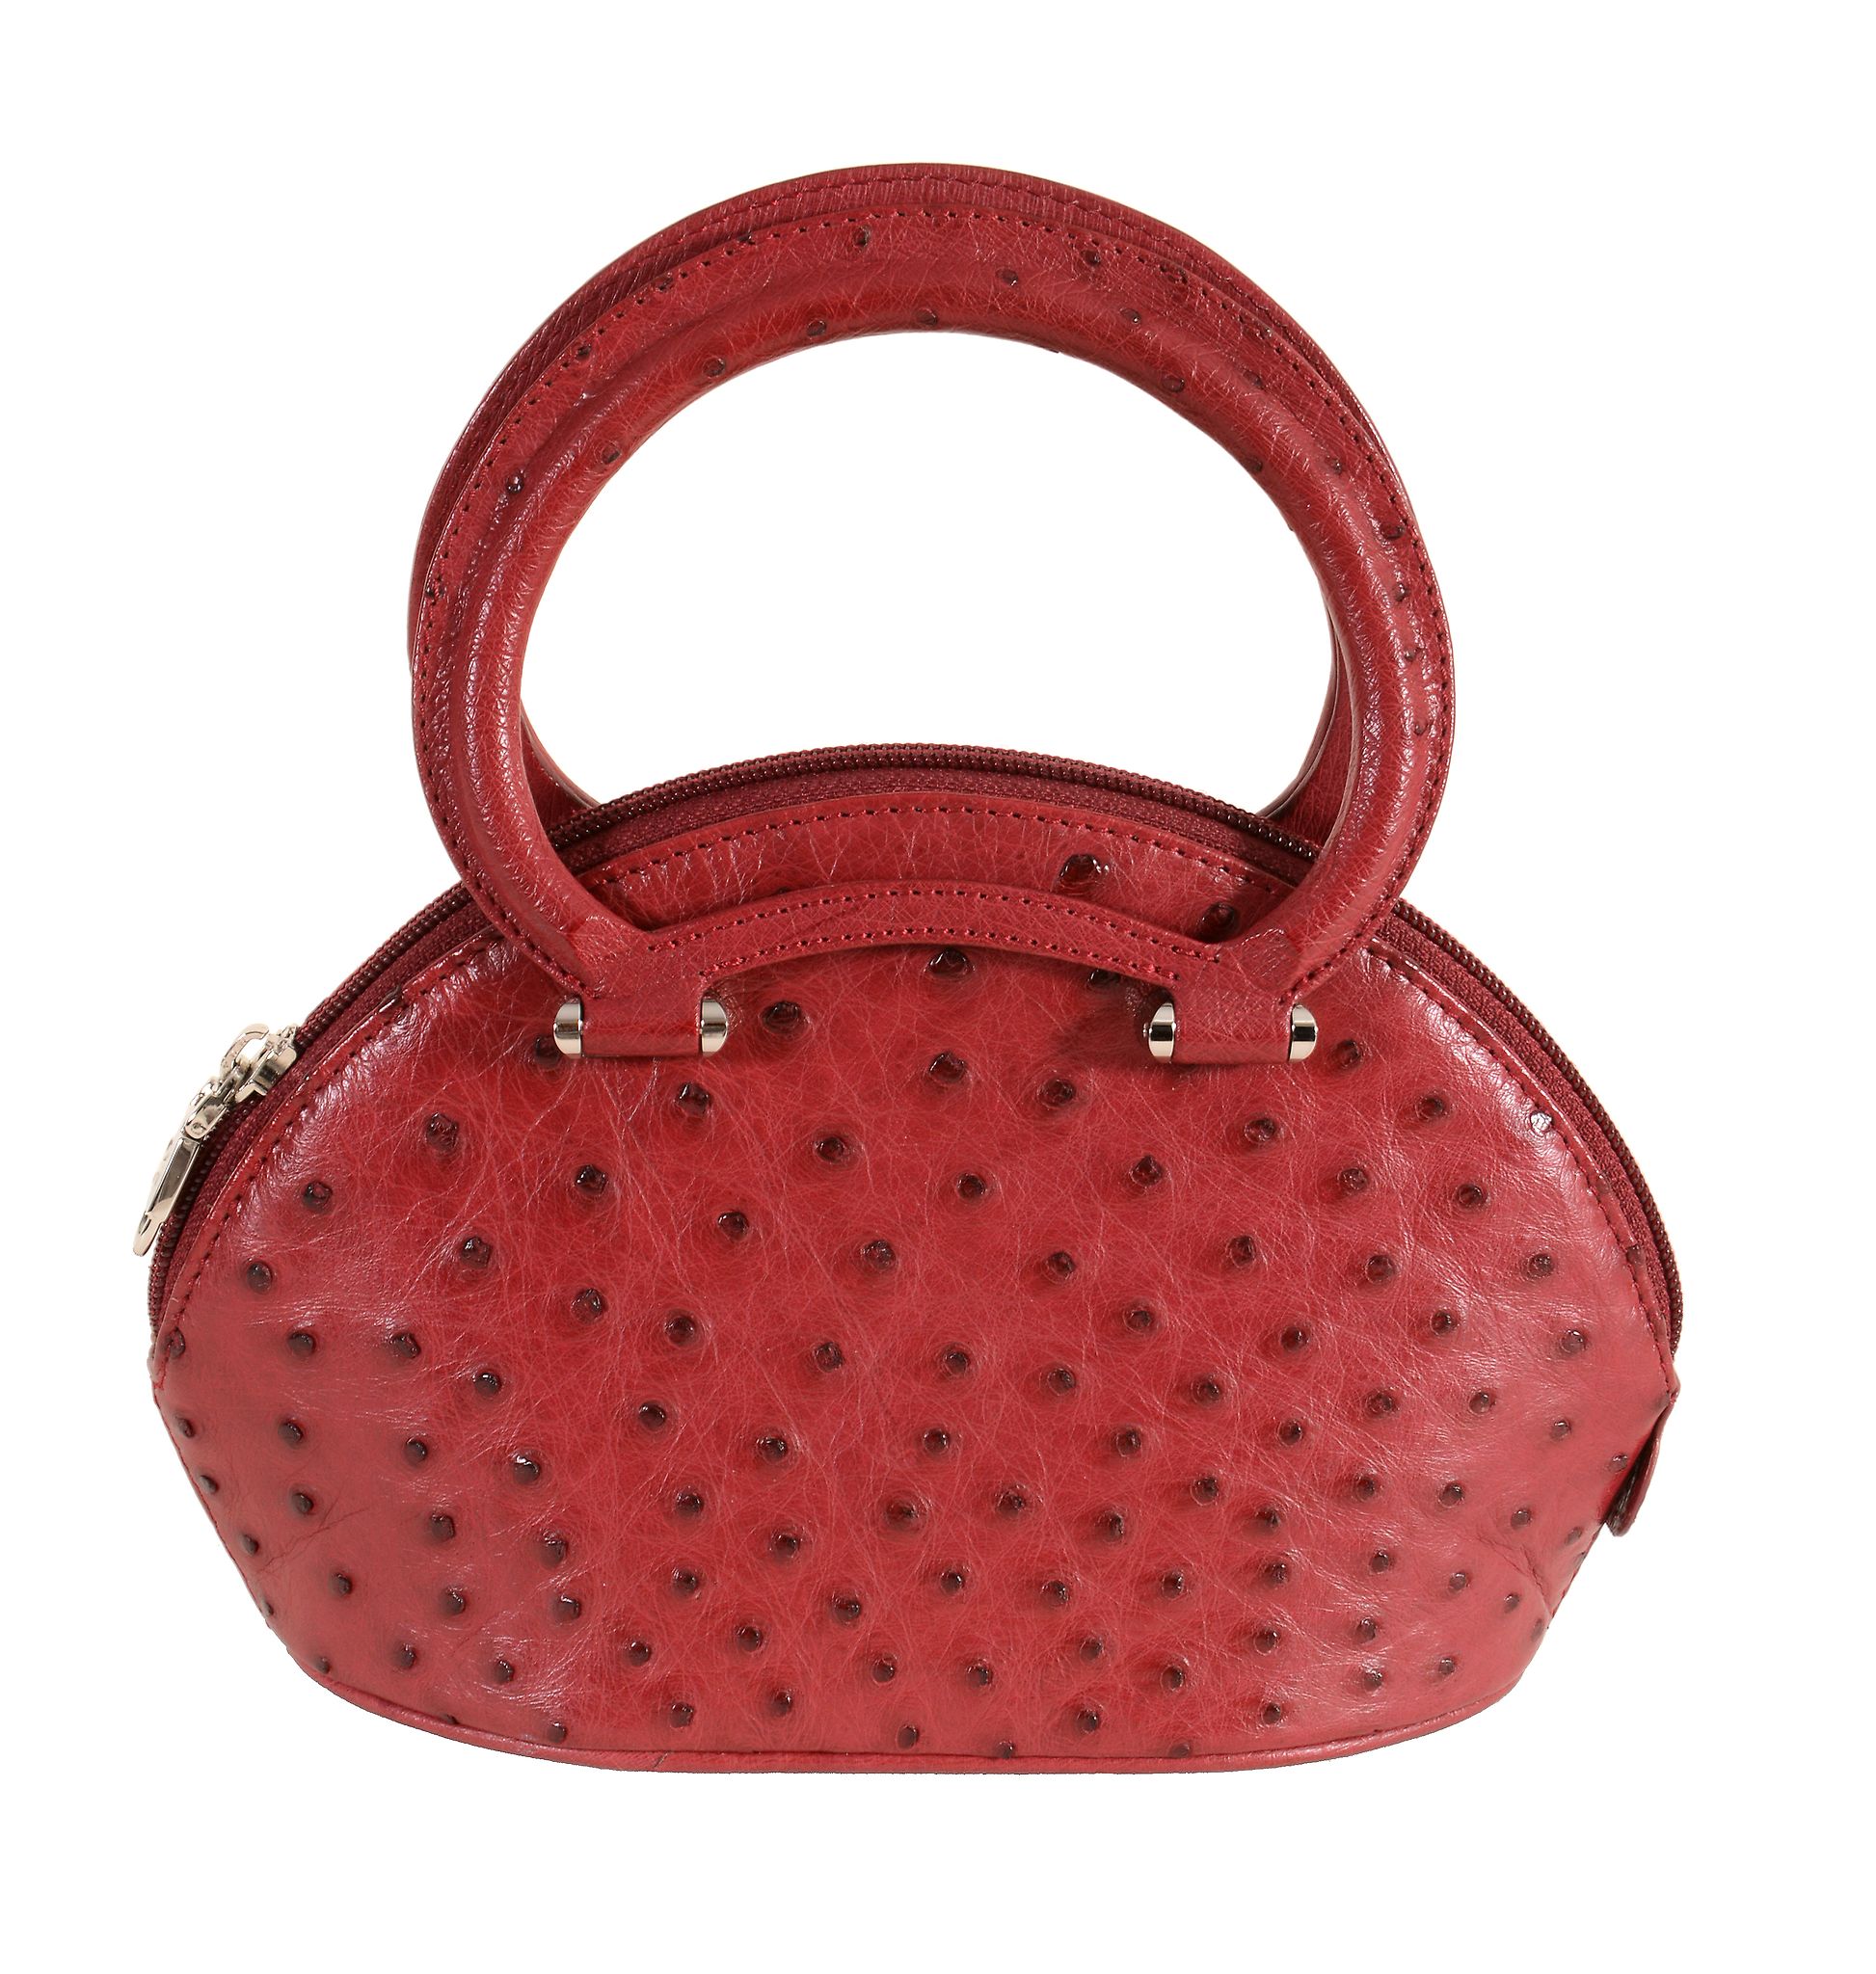 La Portegna, a tan leather handbag, with plaited handles  La Portegna, a tan leather handbag,   with - Image 2 of 6